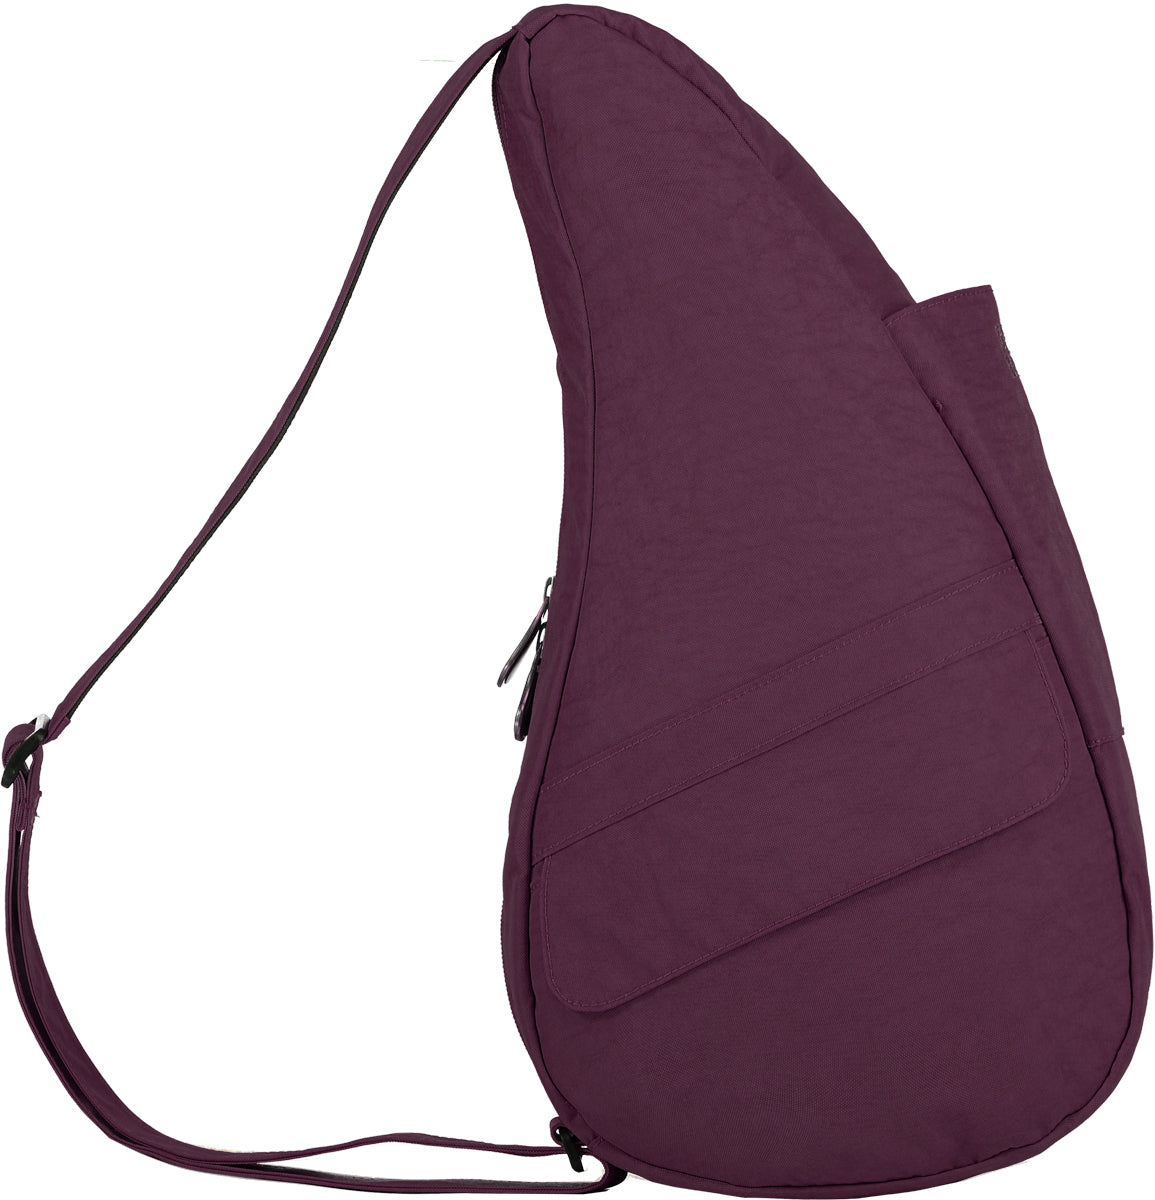 Ameribag Healthy Back Bag Tote Distressed Nylon Small Color: Sangria